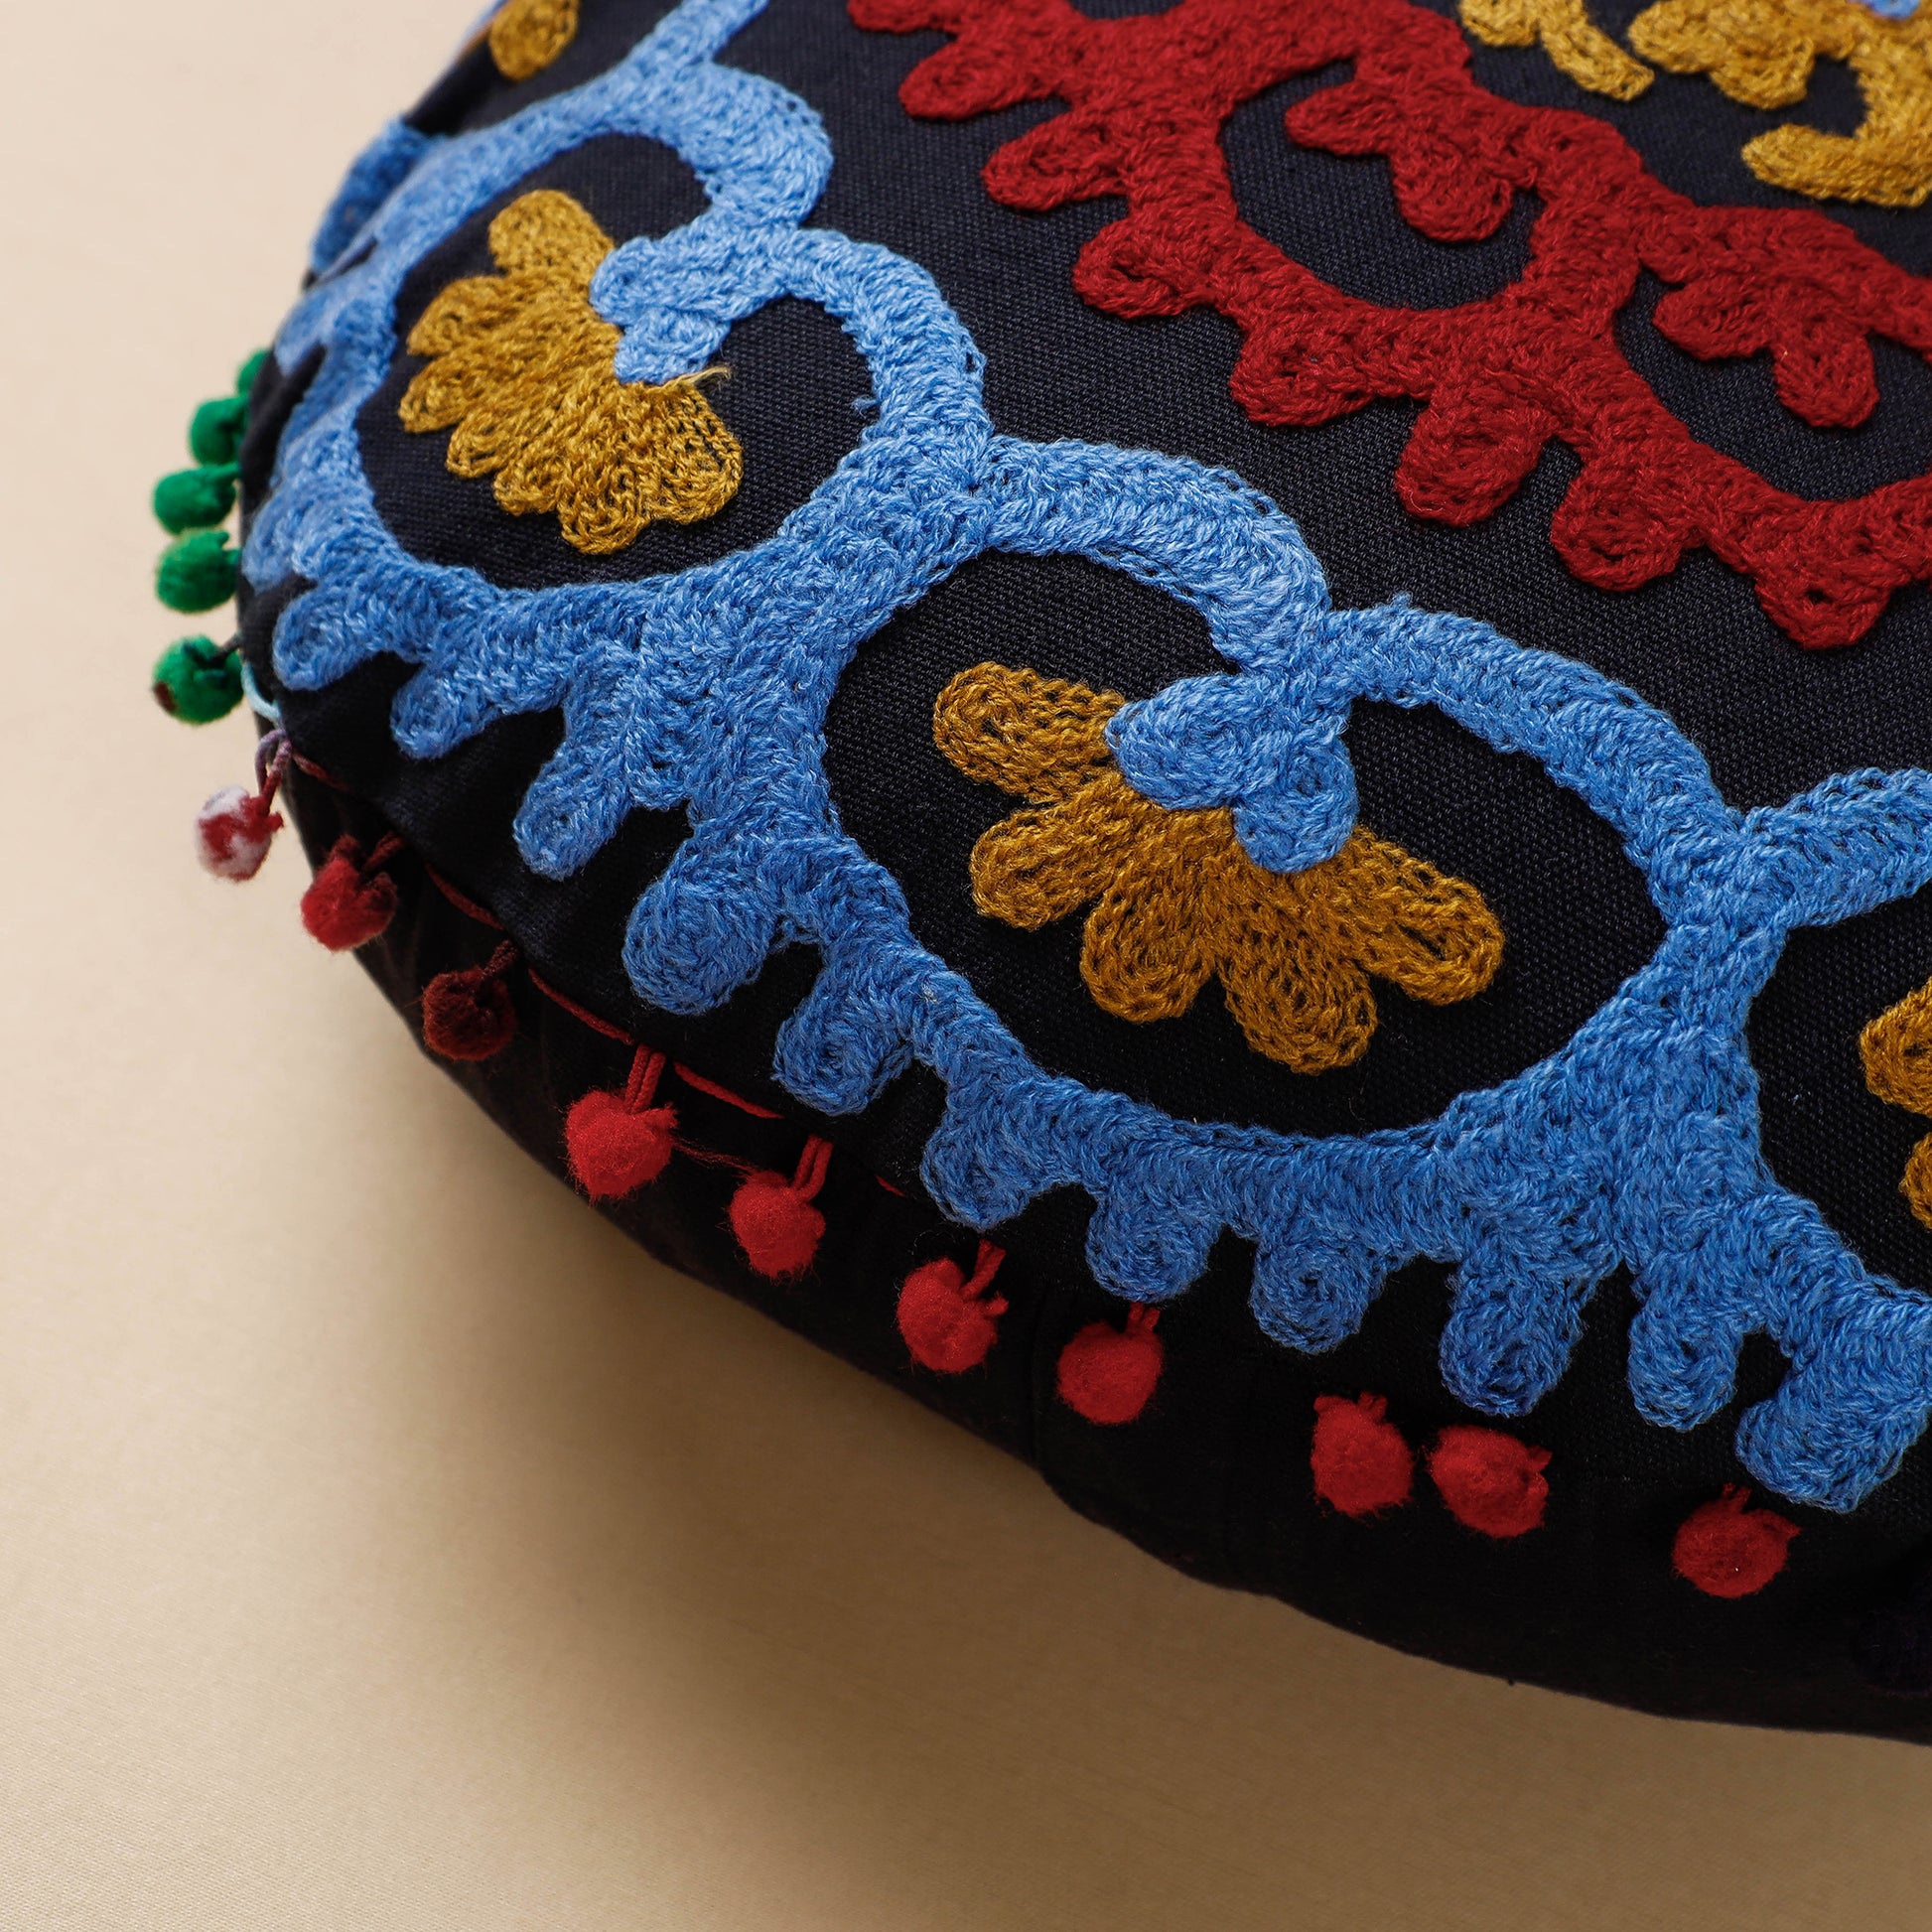  Suzani Embroidery Cushion Cover 